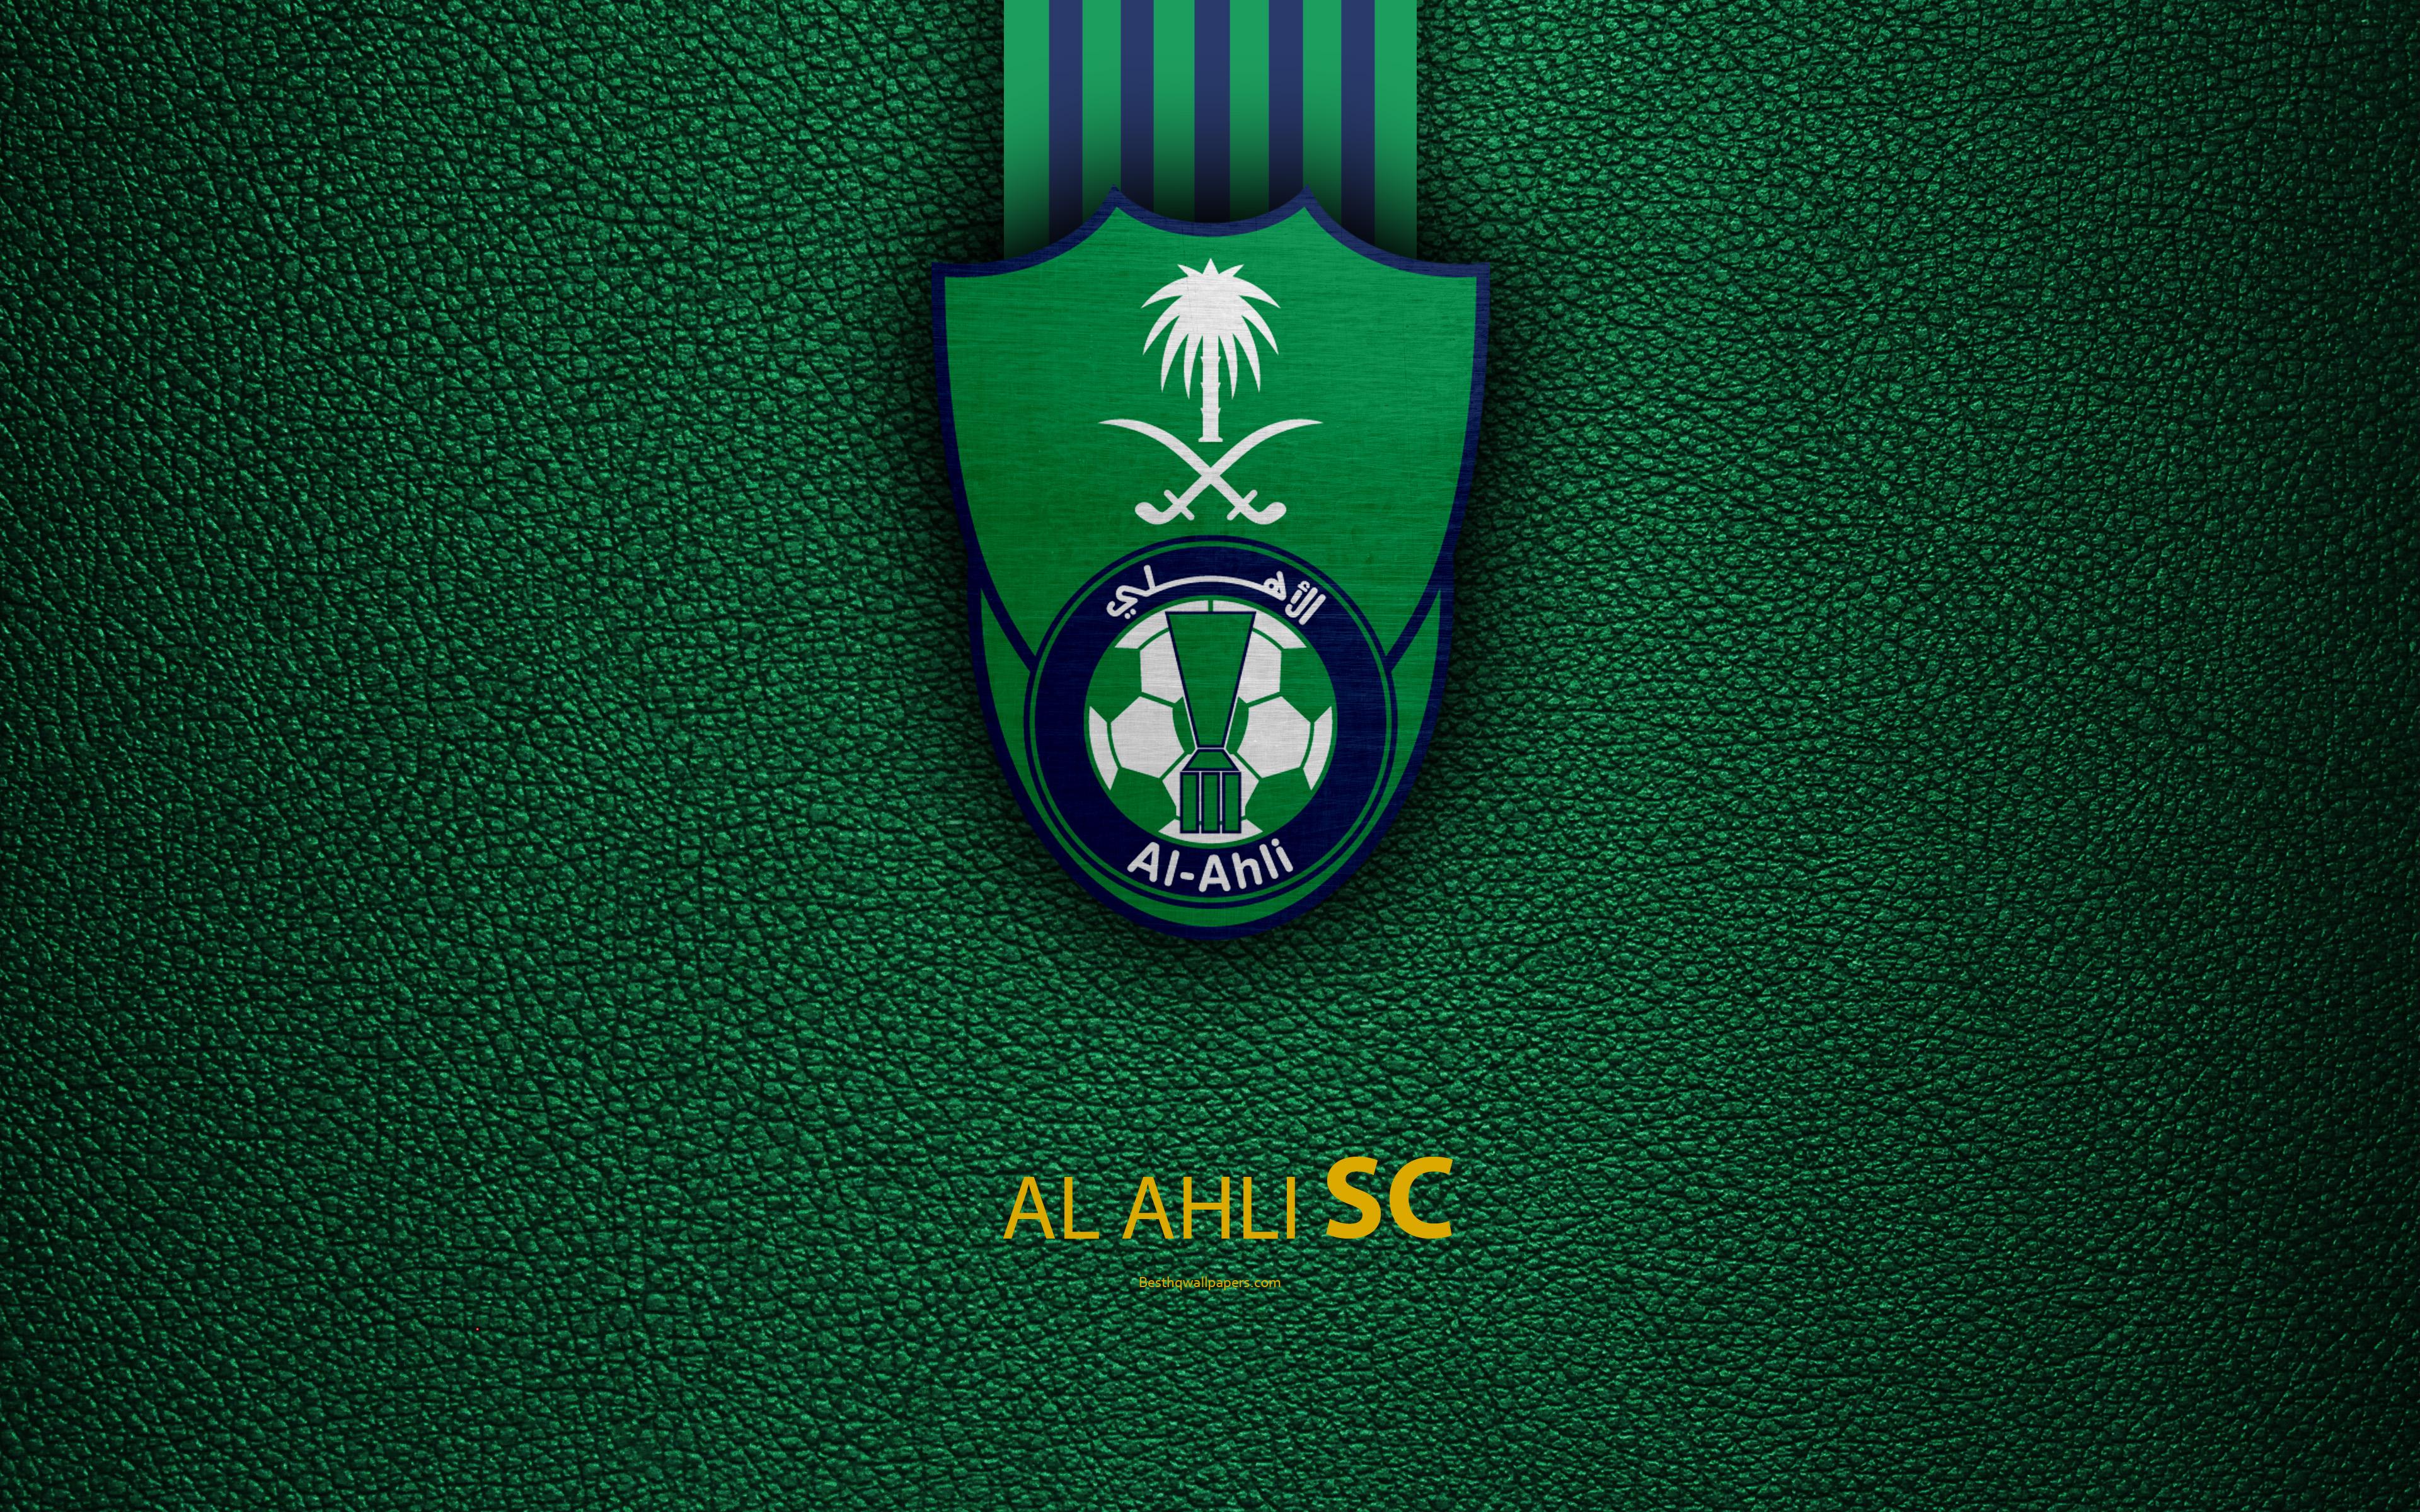 Download wallpaper Al Ahli SC, 4K, Saudi Football Club, leather